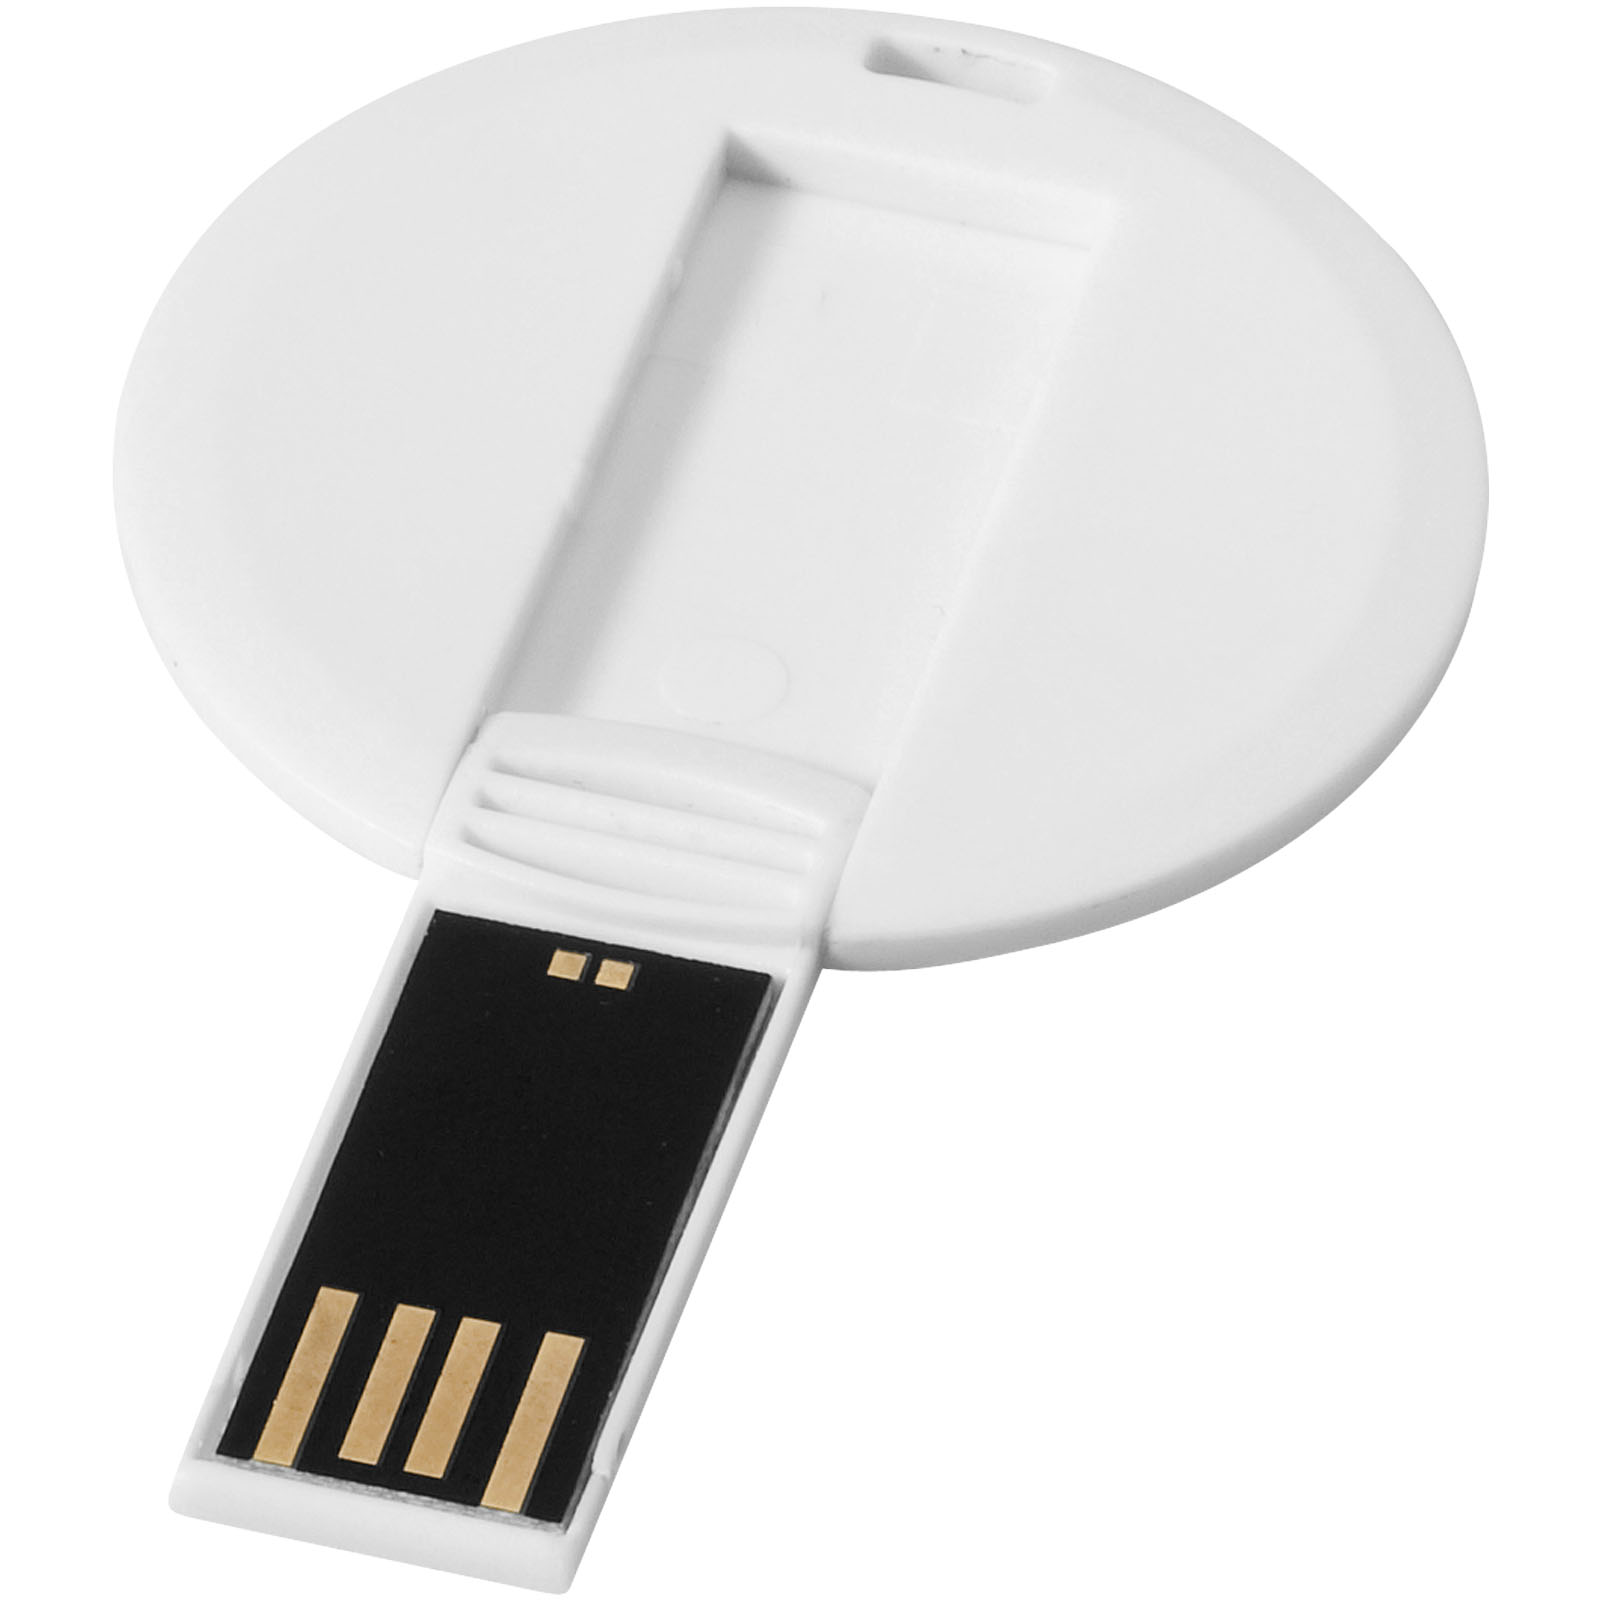 RoundCard USB - Carinaro